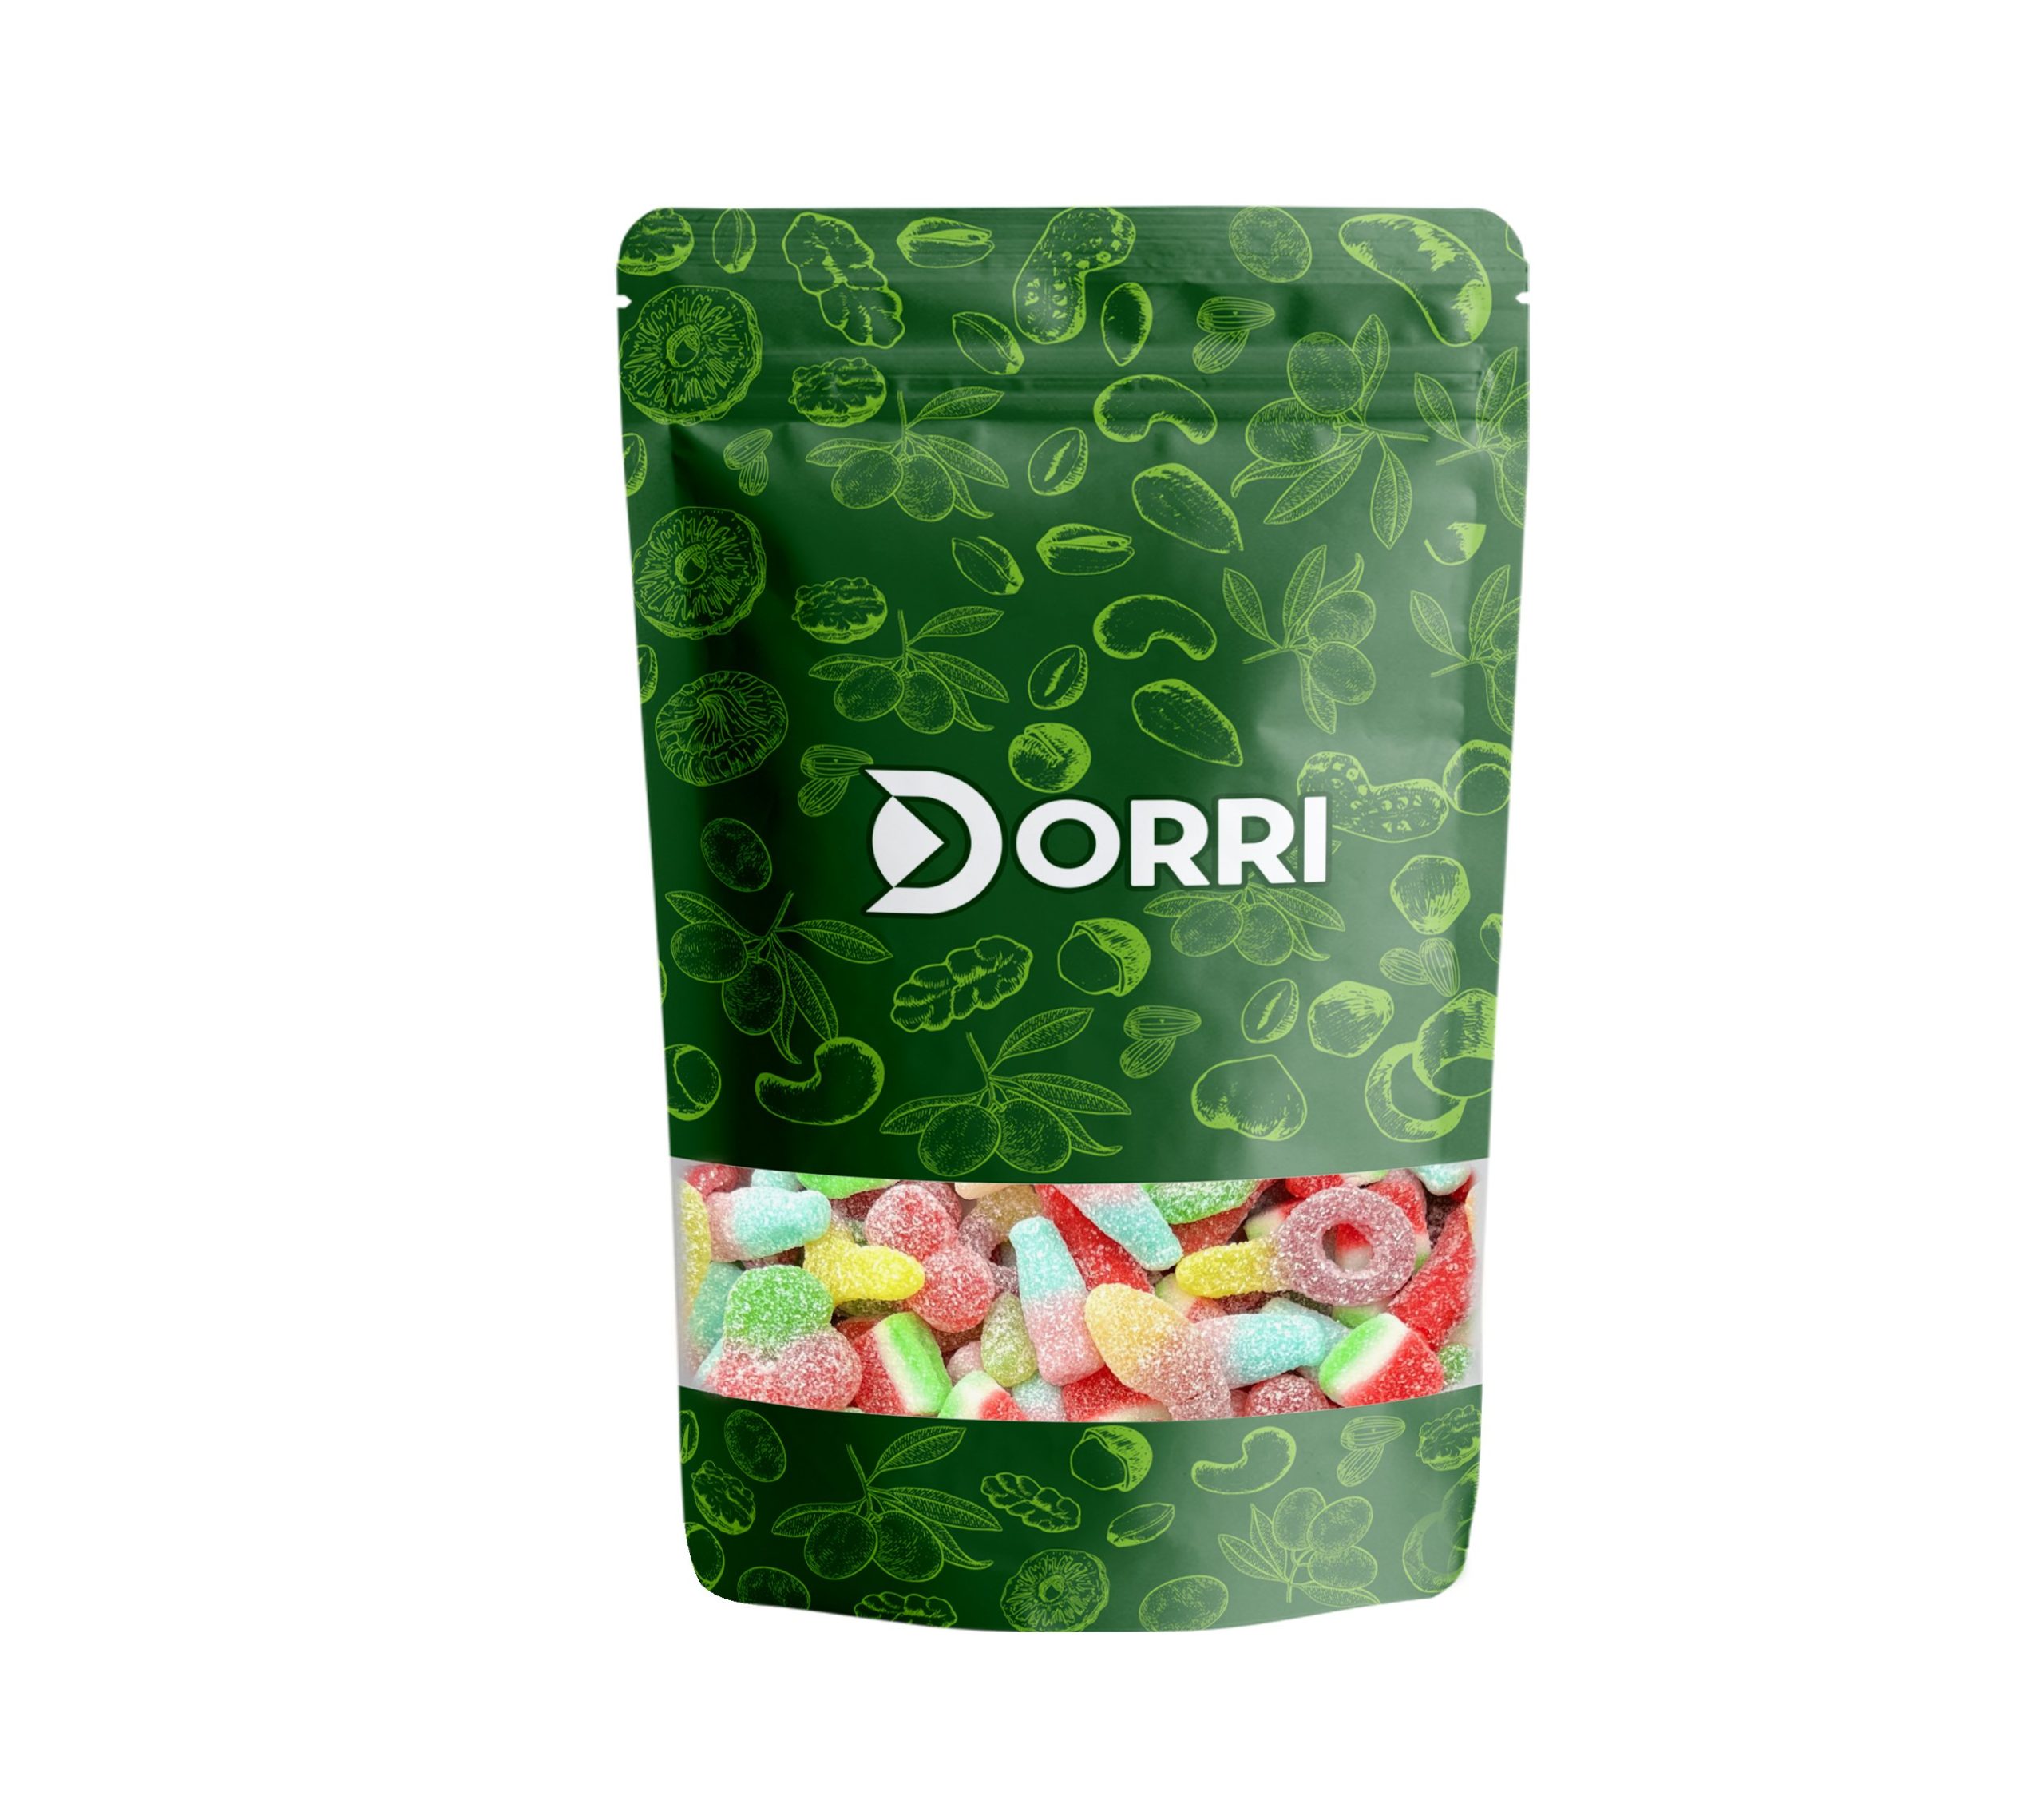 Dorri - Haribo Mixed Bag (Fizzy)